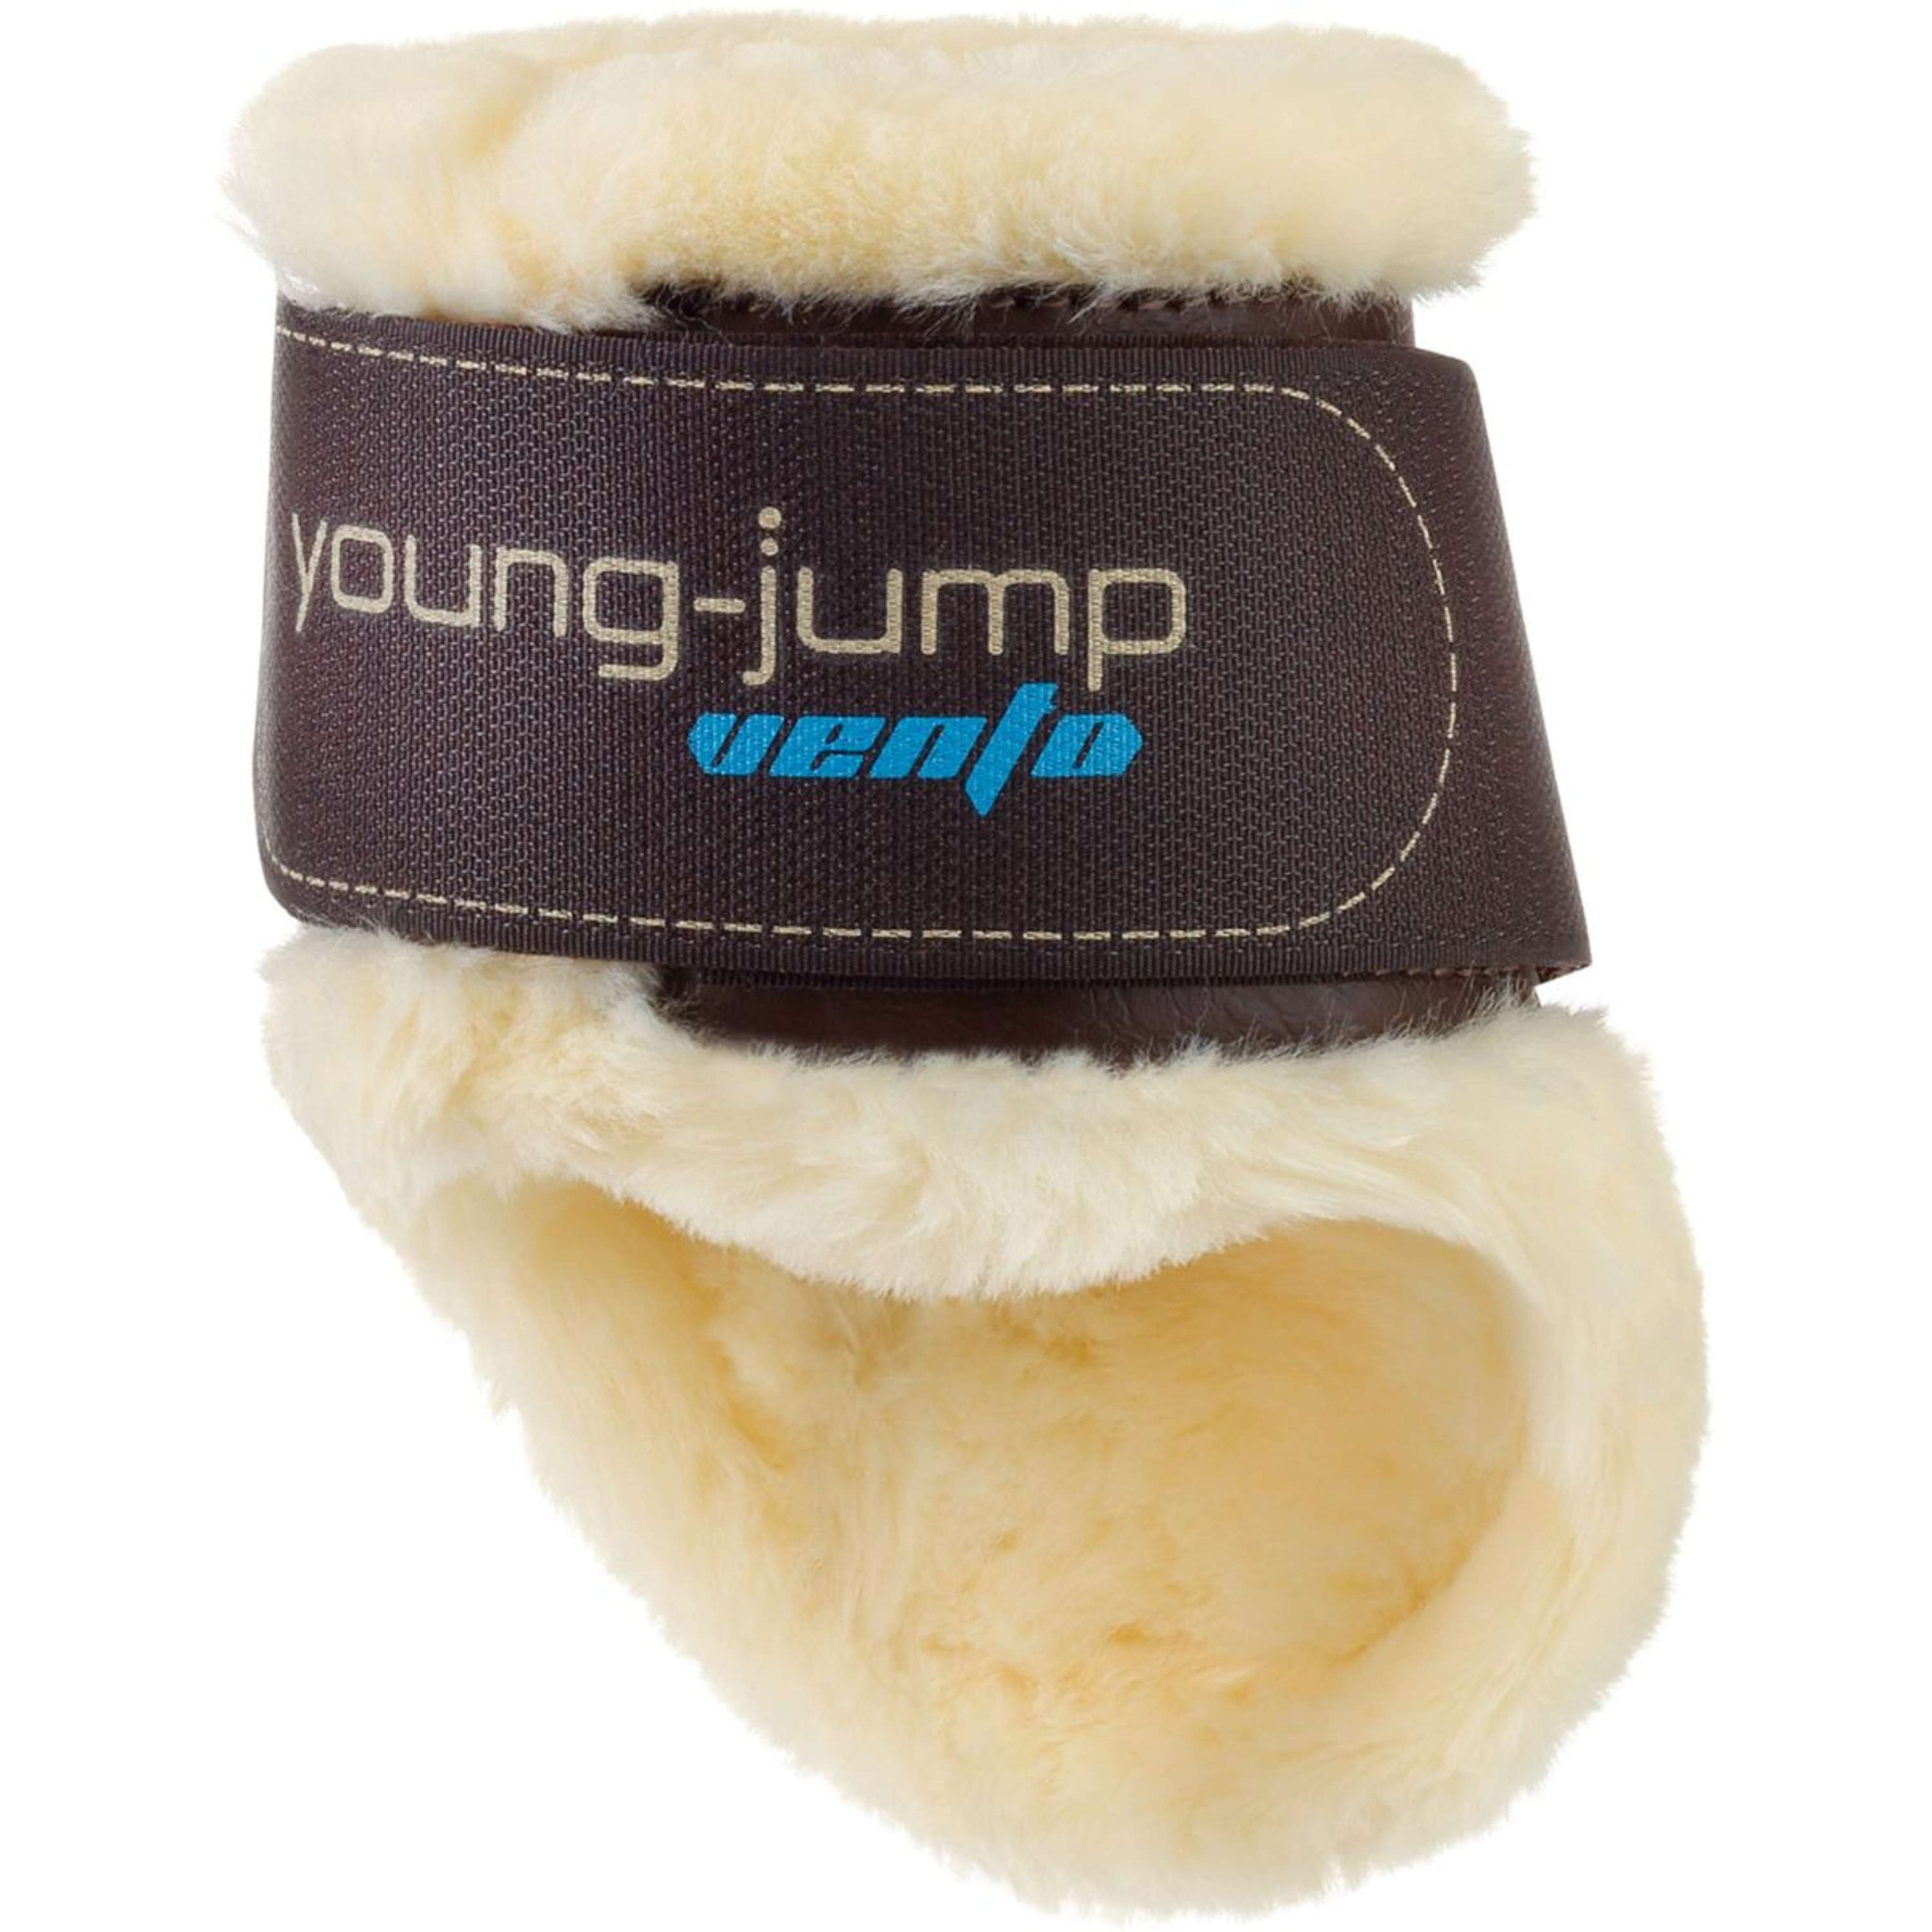 Veredus Protège-Boulets Young Jump Vento Save the Sheep Marron